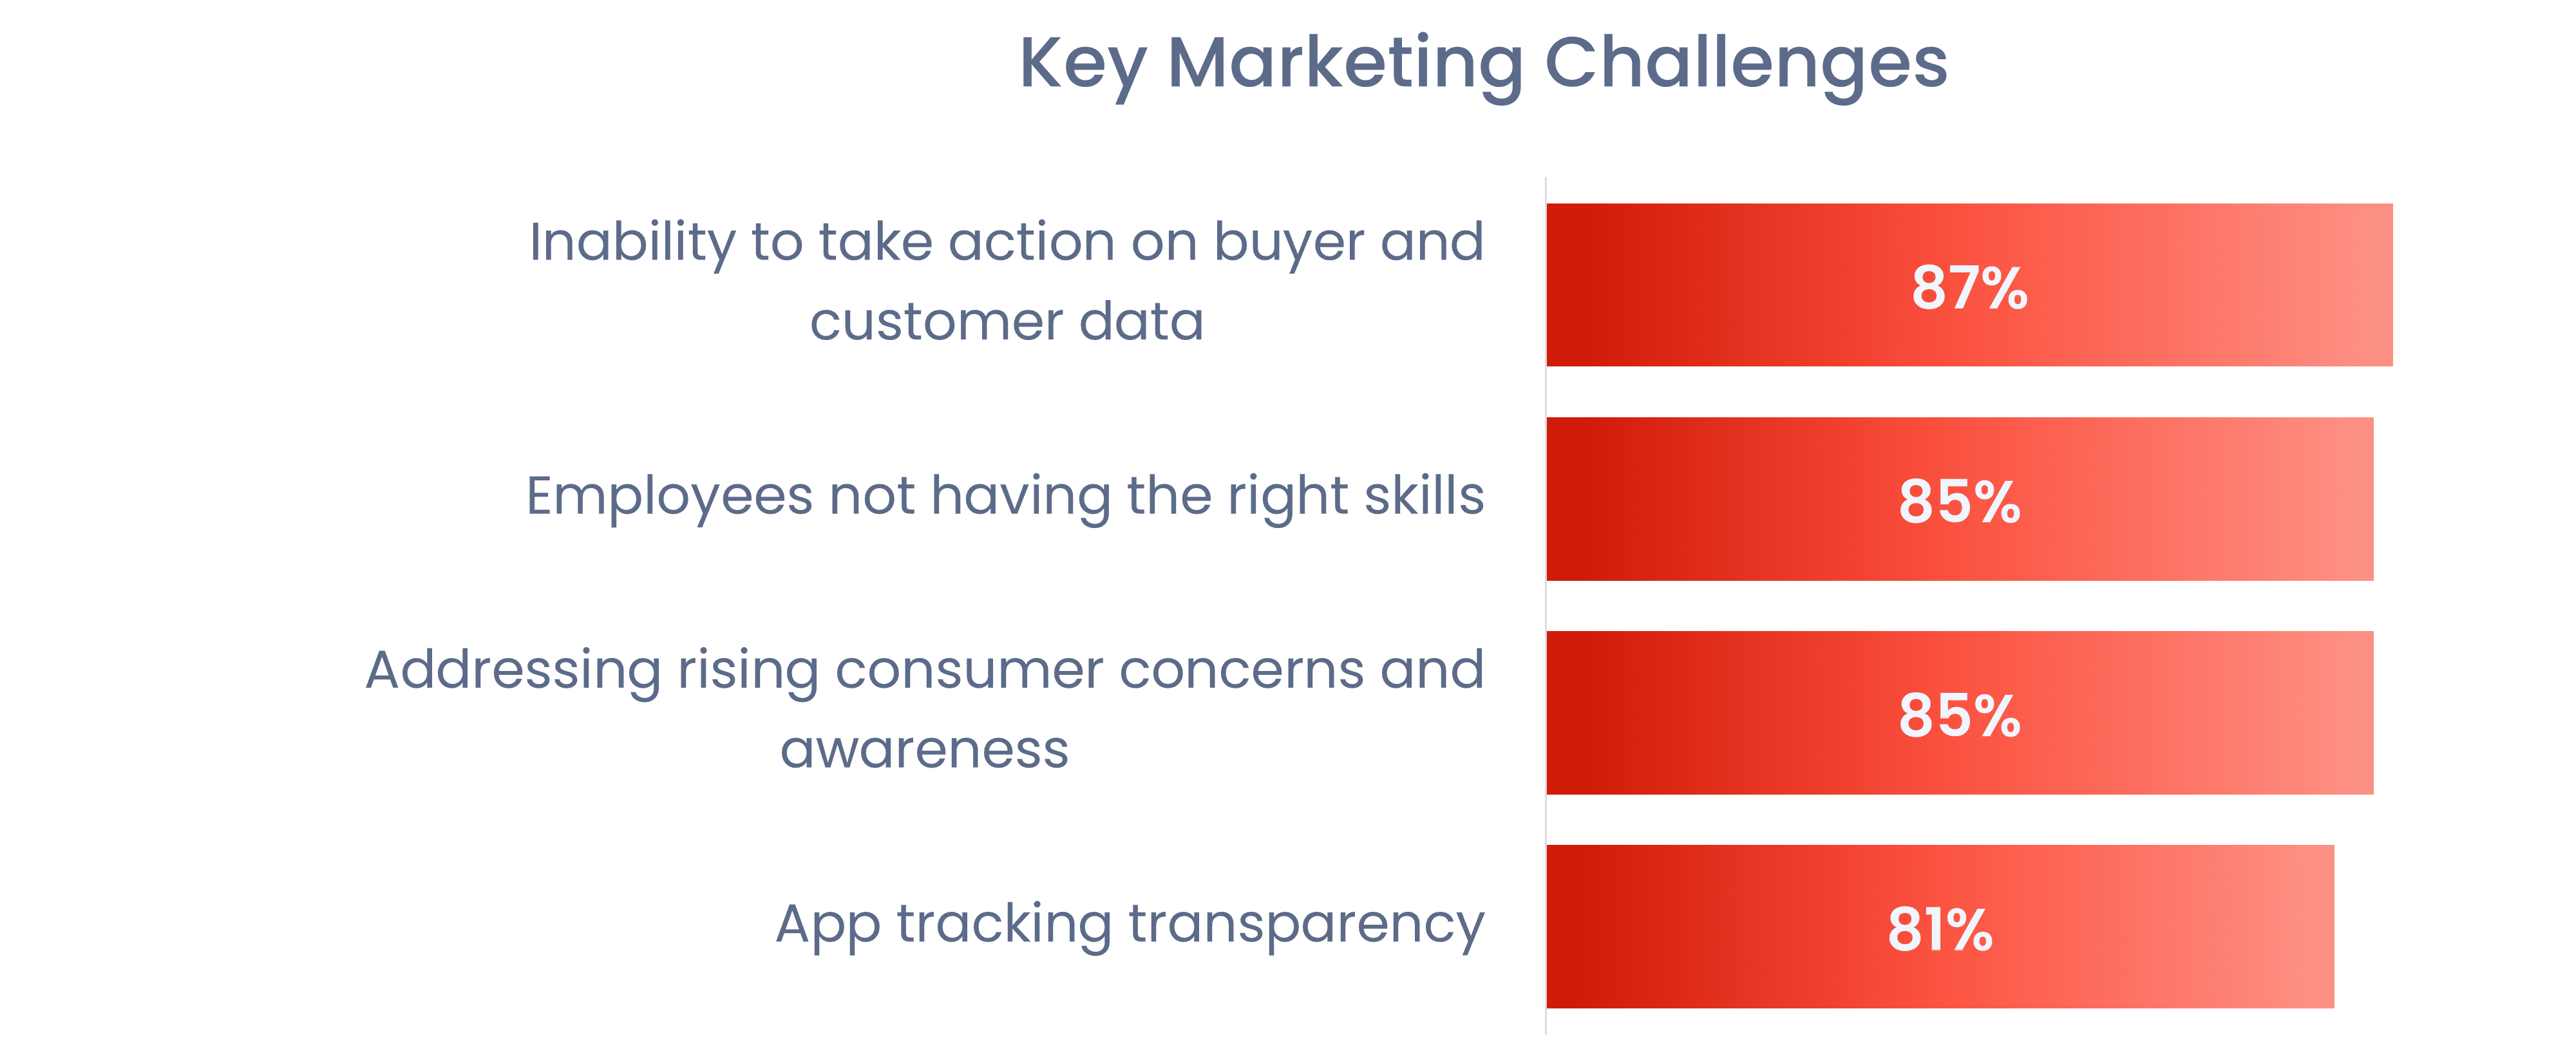 Key Marketing Challenges